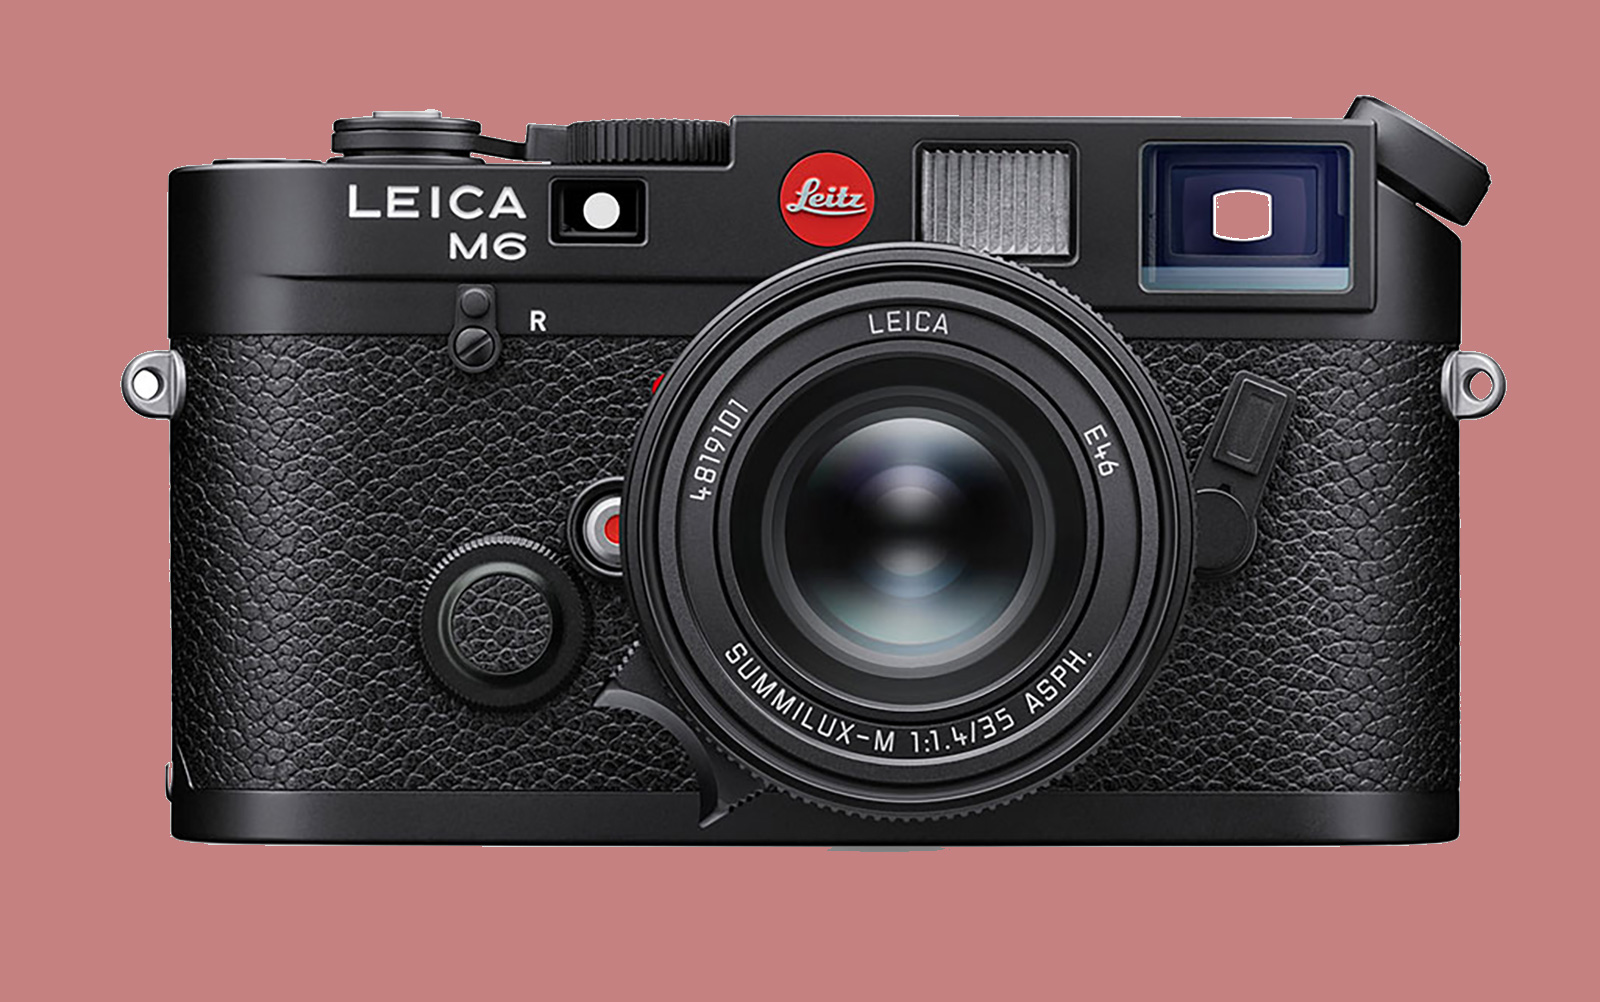 Leica has reissued the iconic M6 film camera